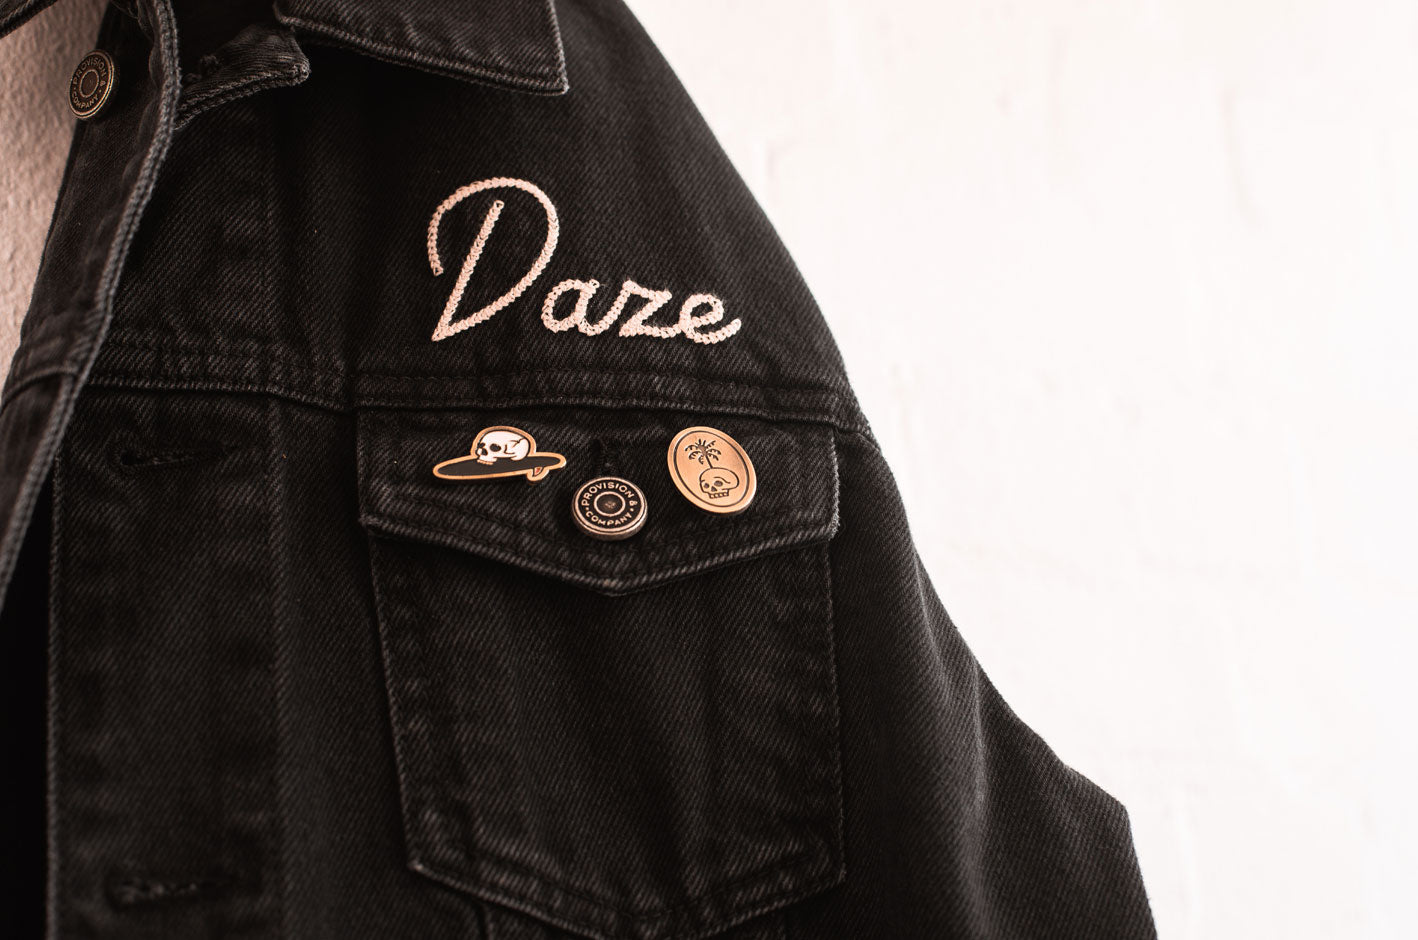 Provision & Co (P&Co) - Dark Daze Jacket Feature